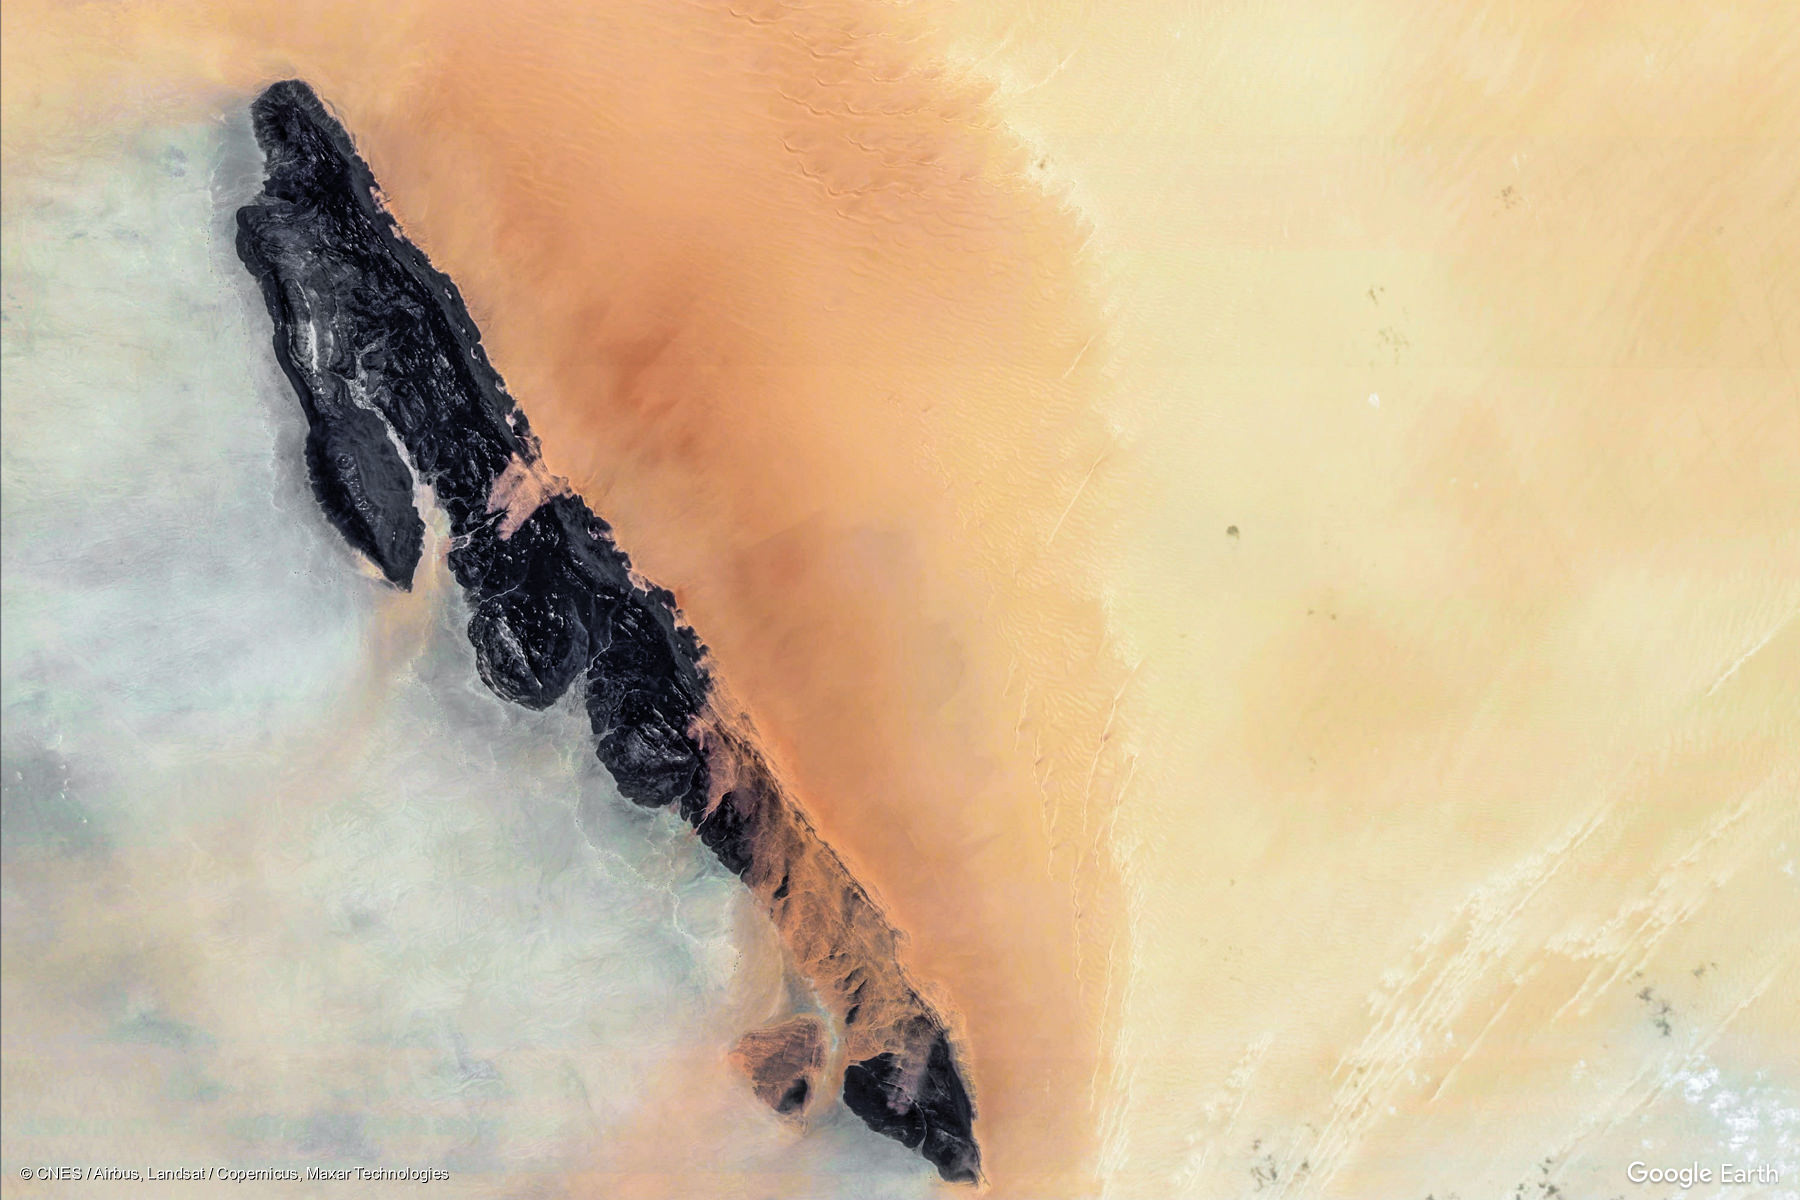 earthview withgoogle mauritania nouakchott